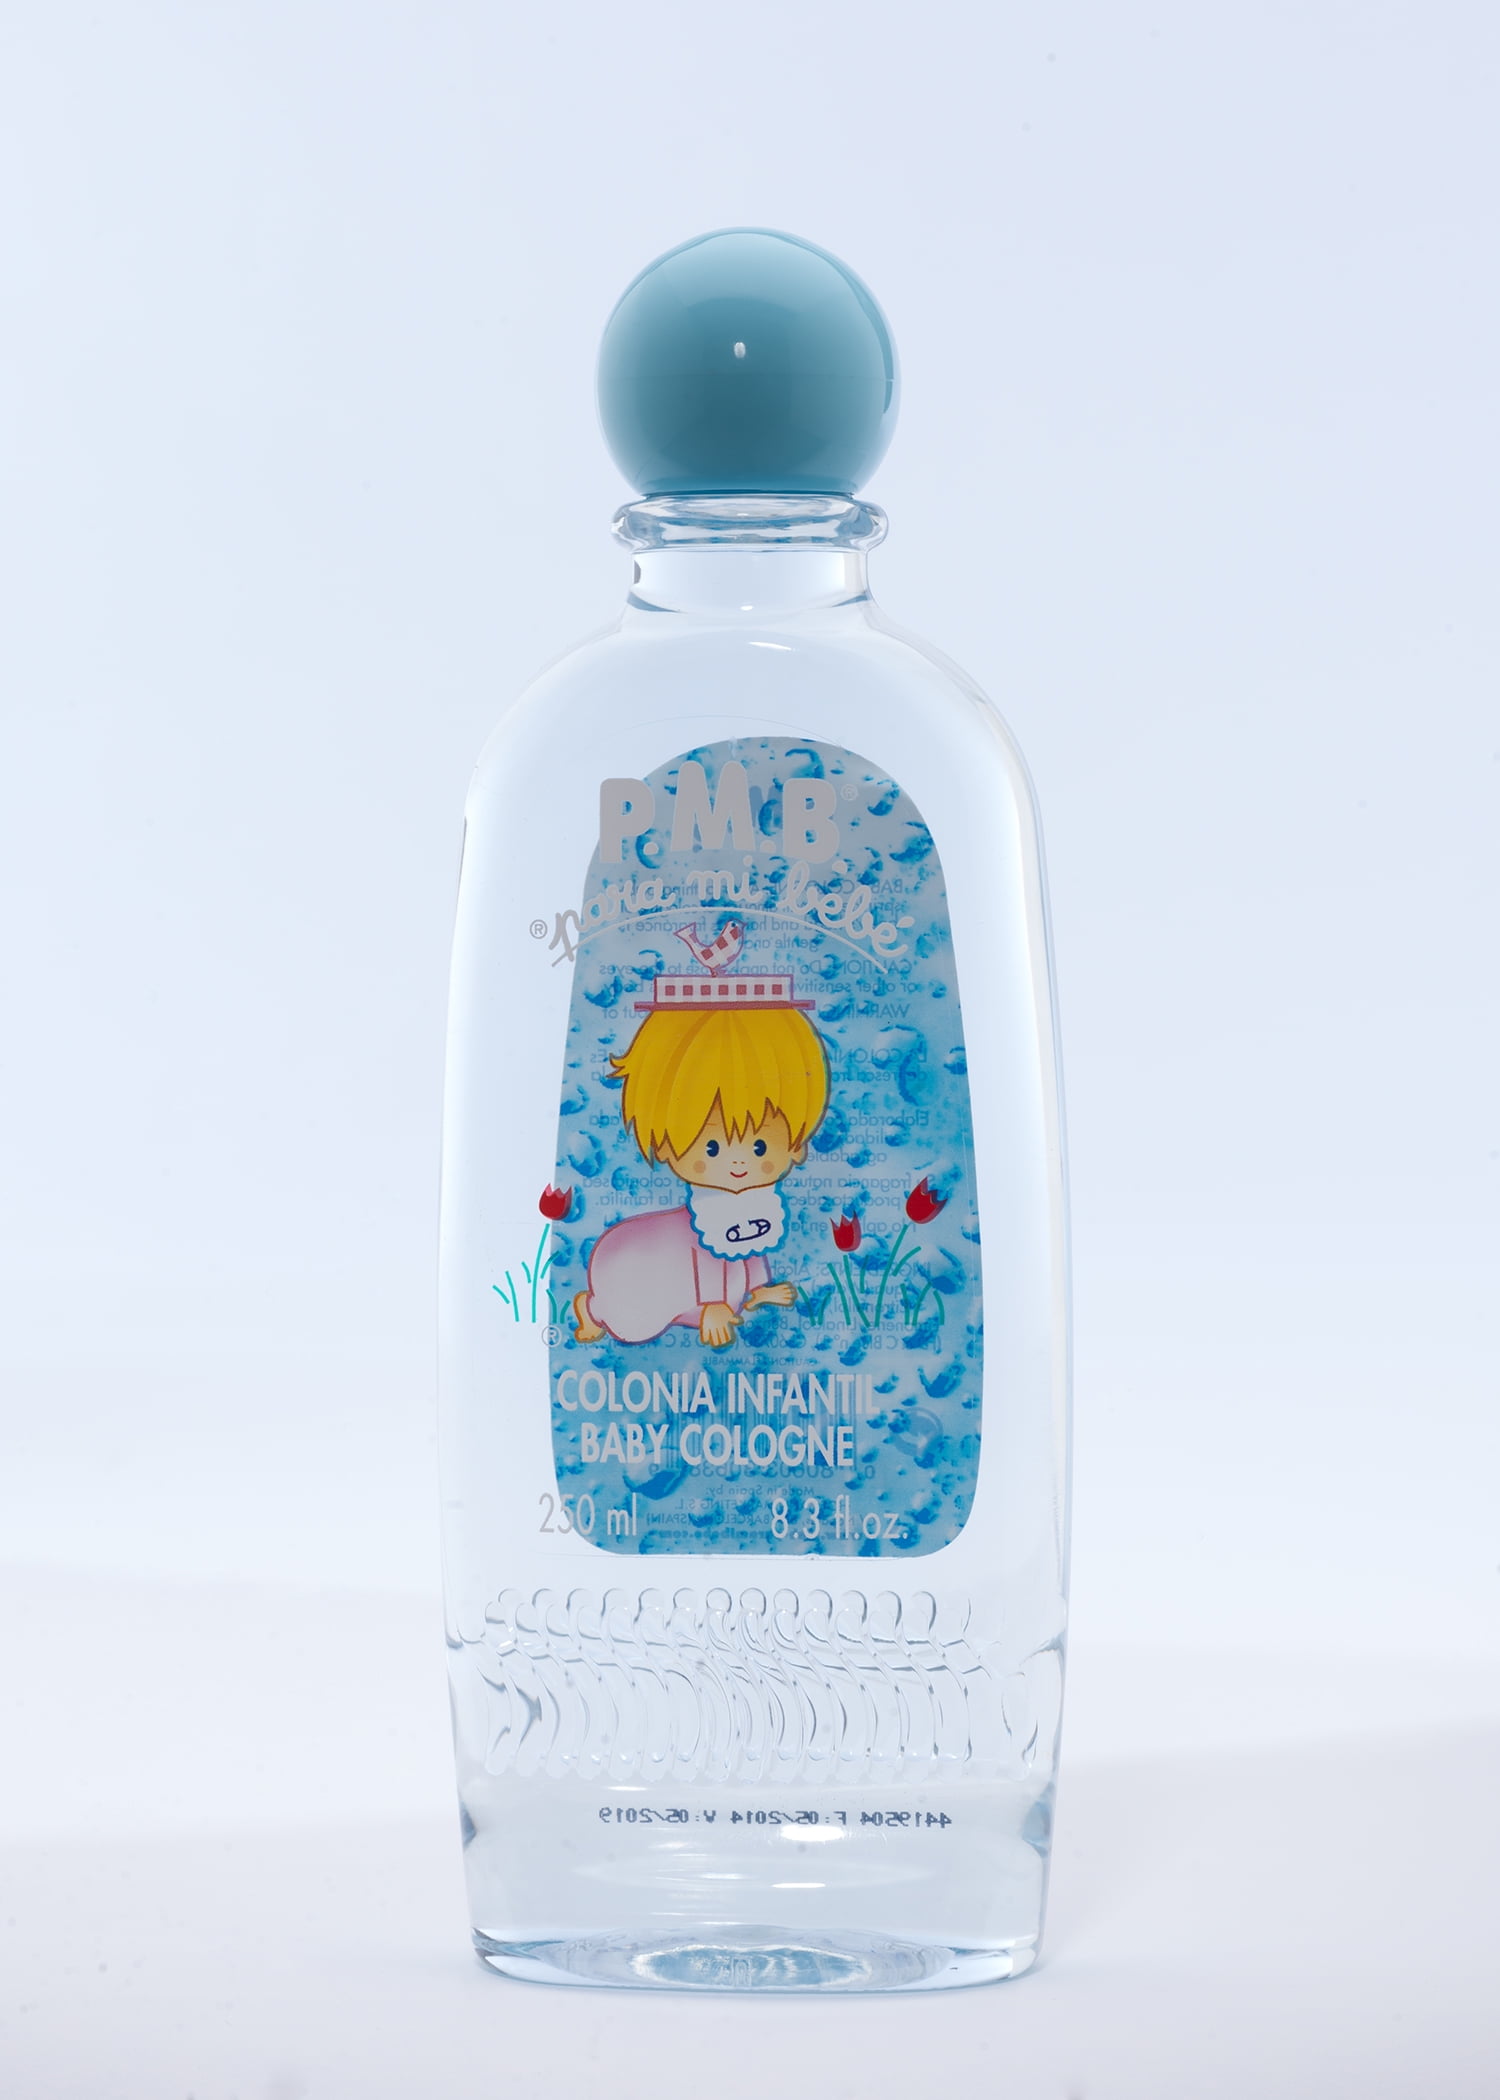 baby cologne blue bottle